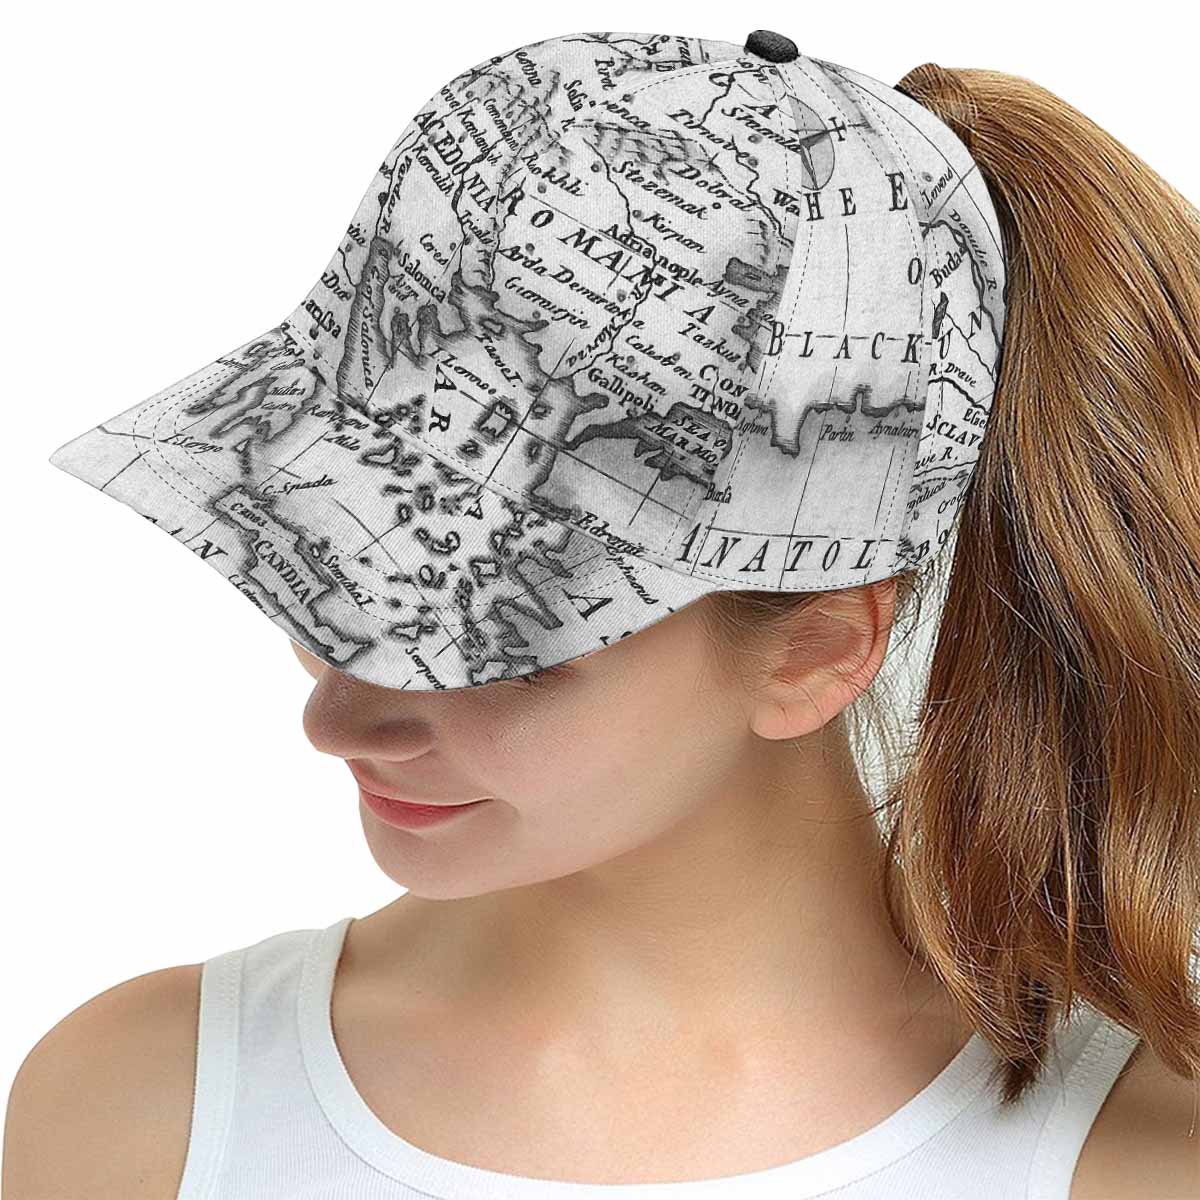 Antique Map design mens or womens deep snapback cap, trucker hat, Design 20